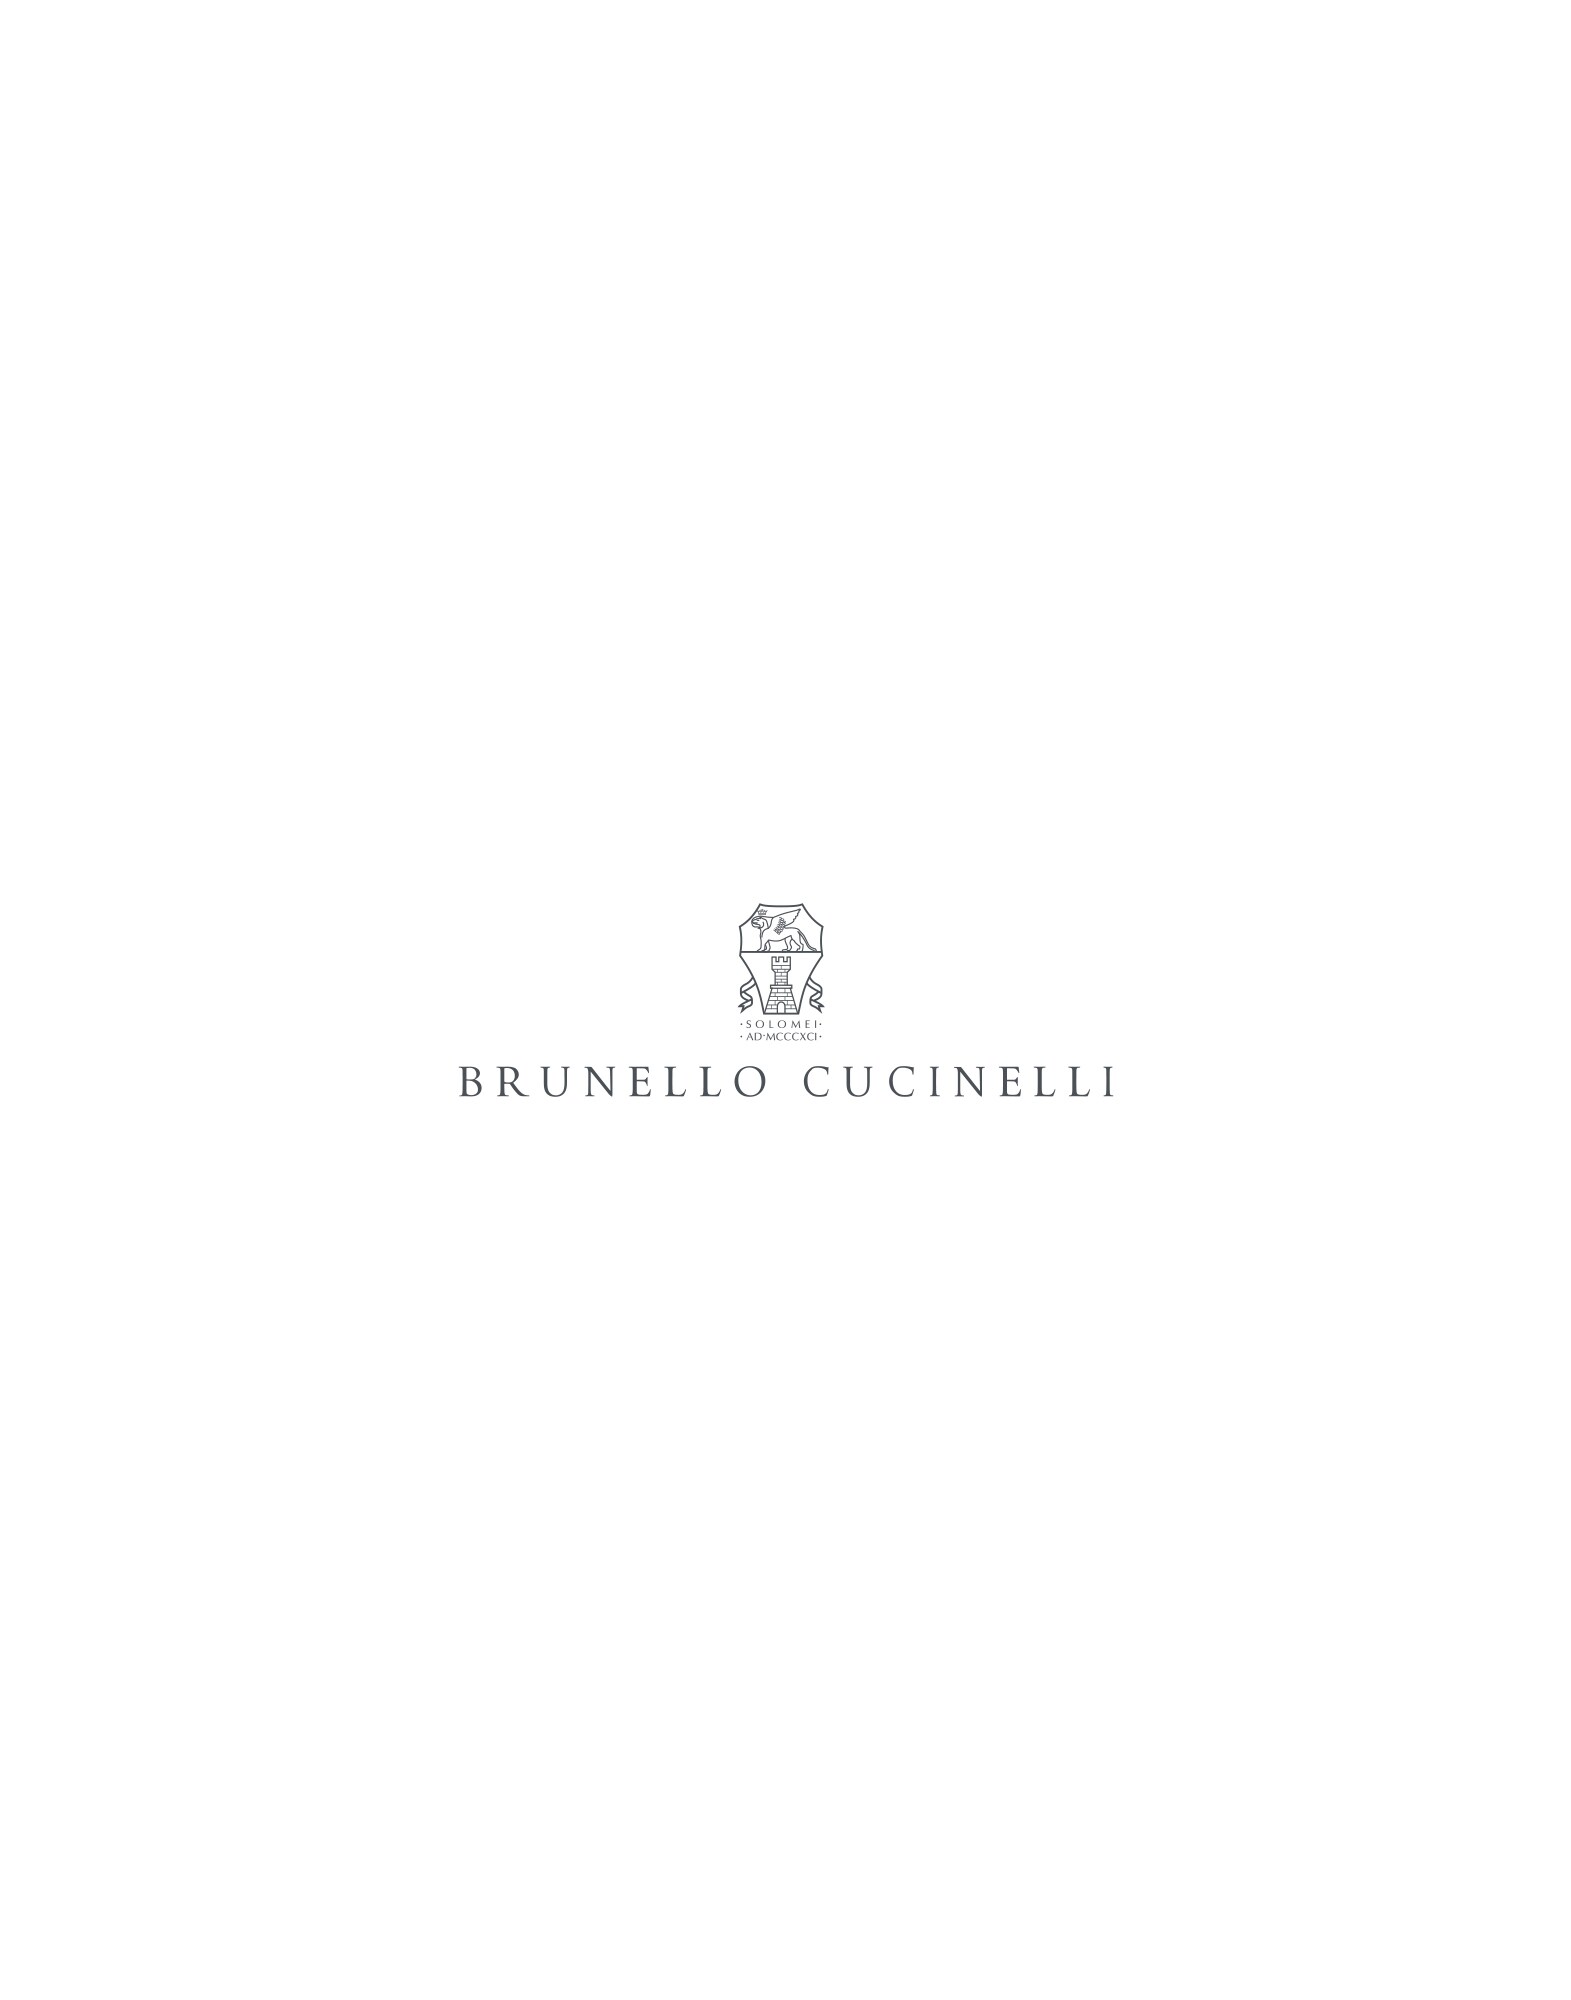 Charger plate Lessivè Lifestyle - Brunello Cucinelli